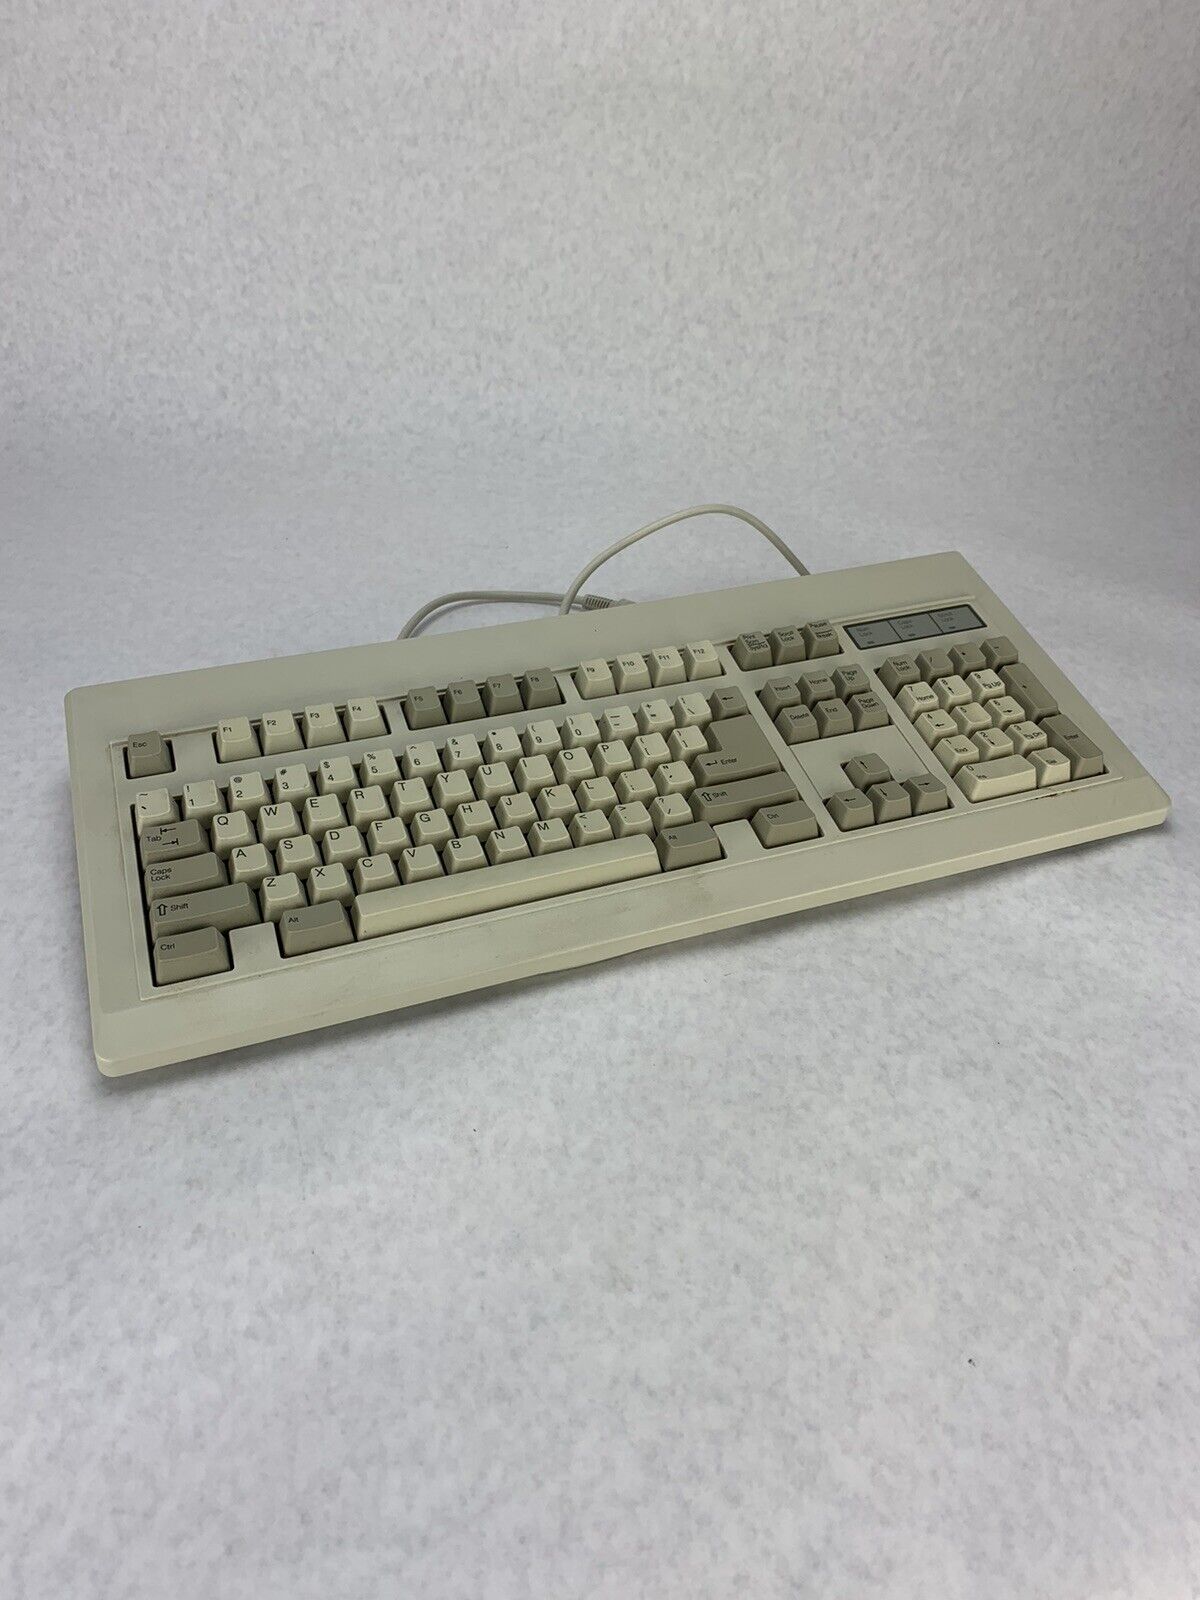 Vintage NMB Technologies Keyboard  RT6255T 119999-001  Rev A